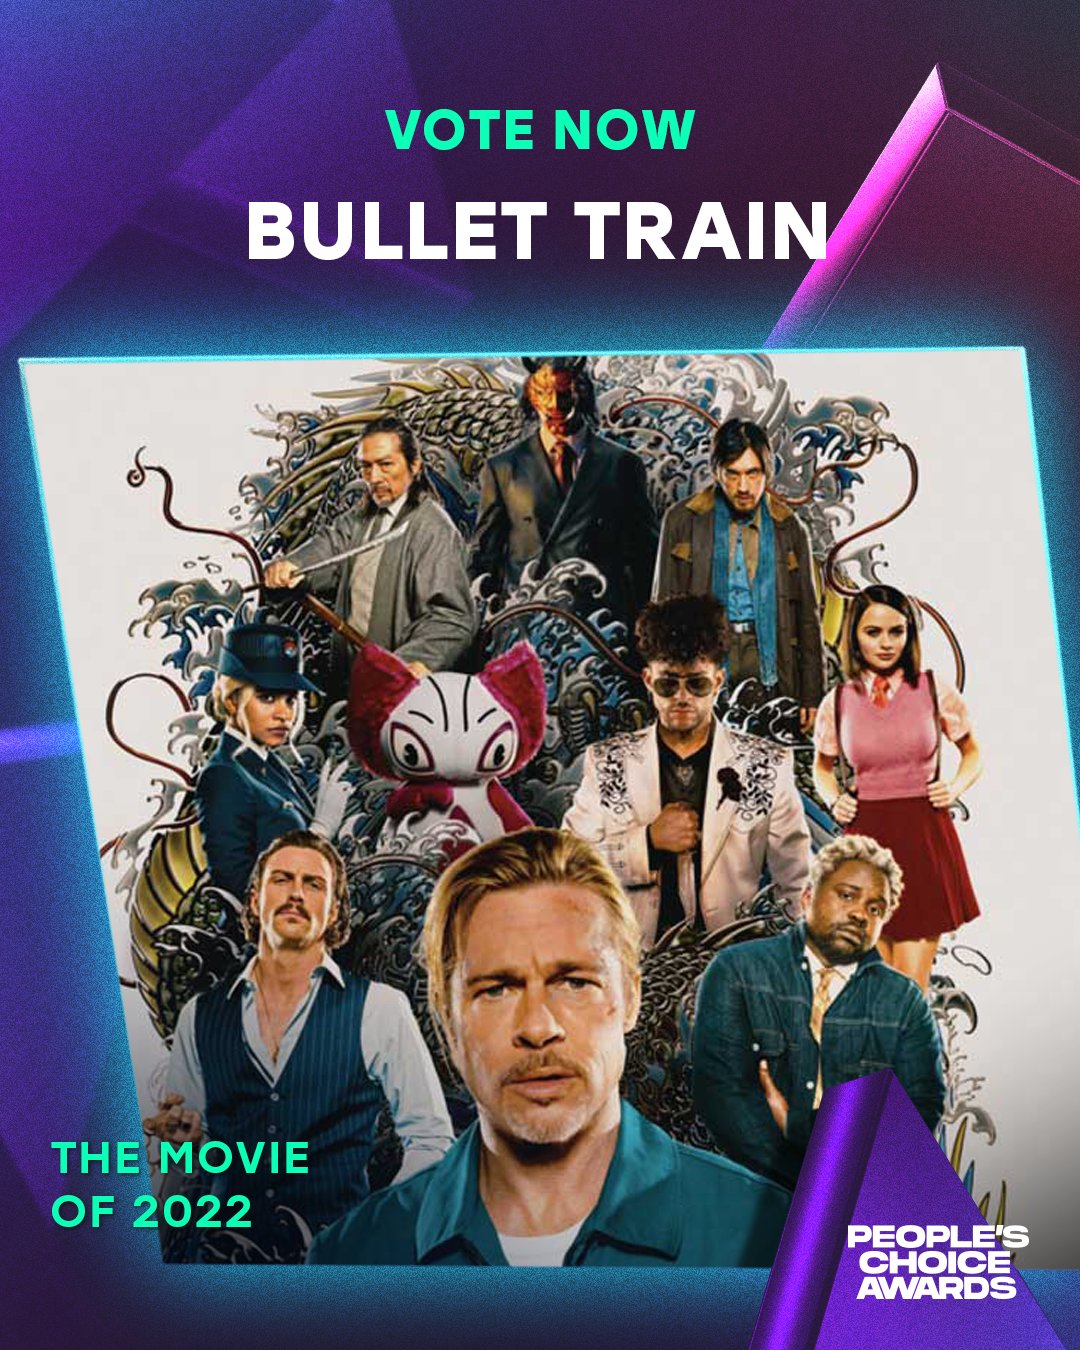 Bullet Train [4K UHD + Blu-ray] : Brad Pitt, Joey King  